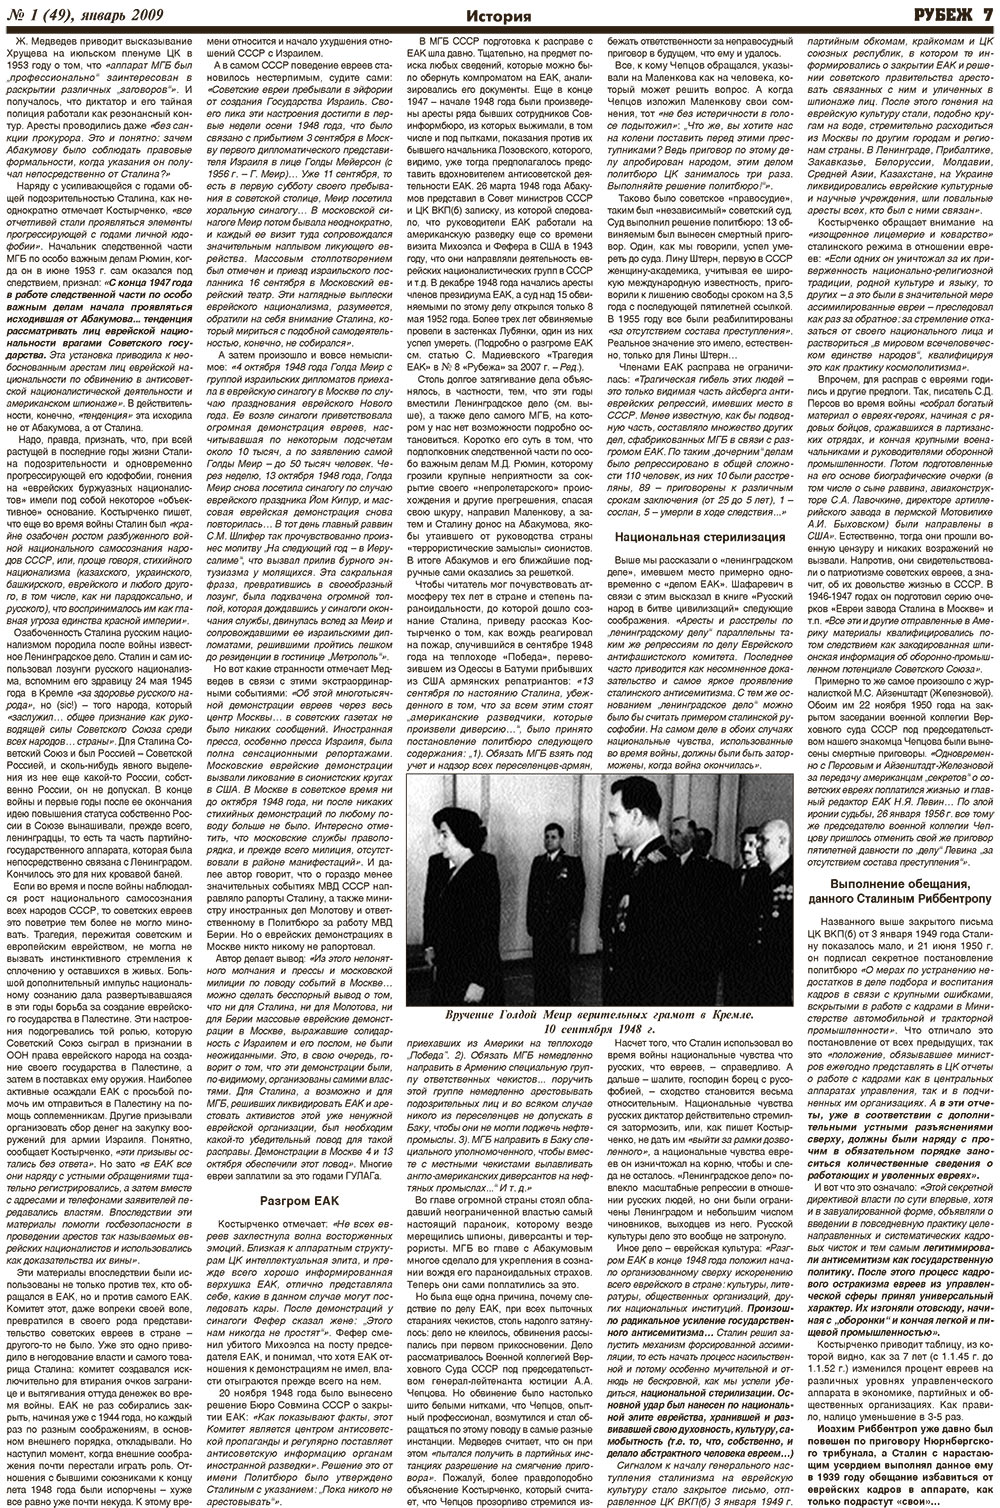 Рубеж, газета. 2009 №1 стр.7